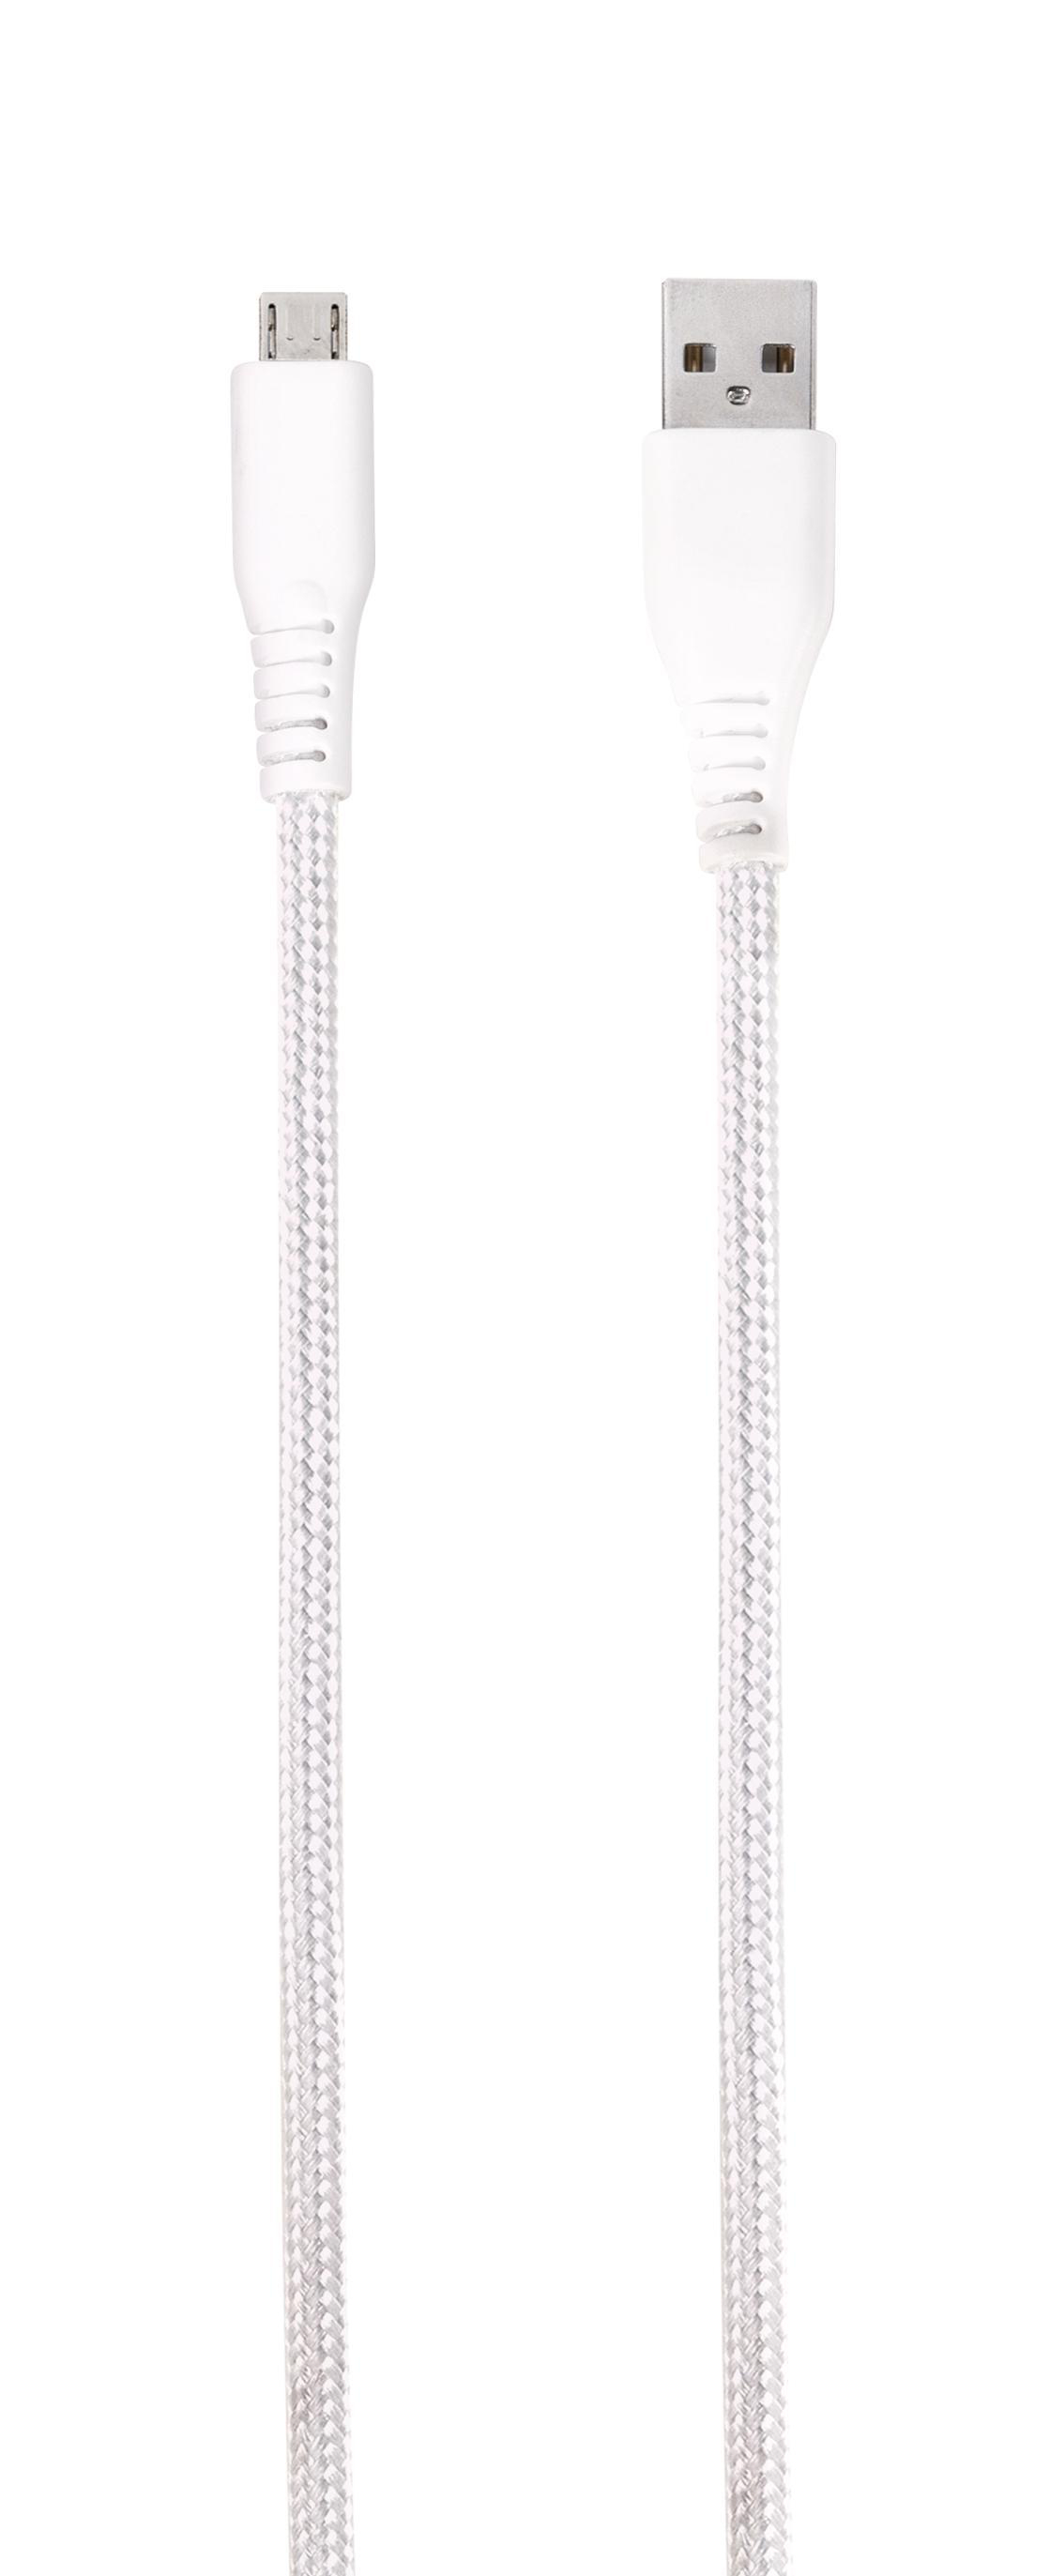 LongLife Weiß Micro-USB, VIVANCO 2,5 m, Ladekabel,